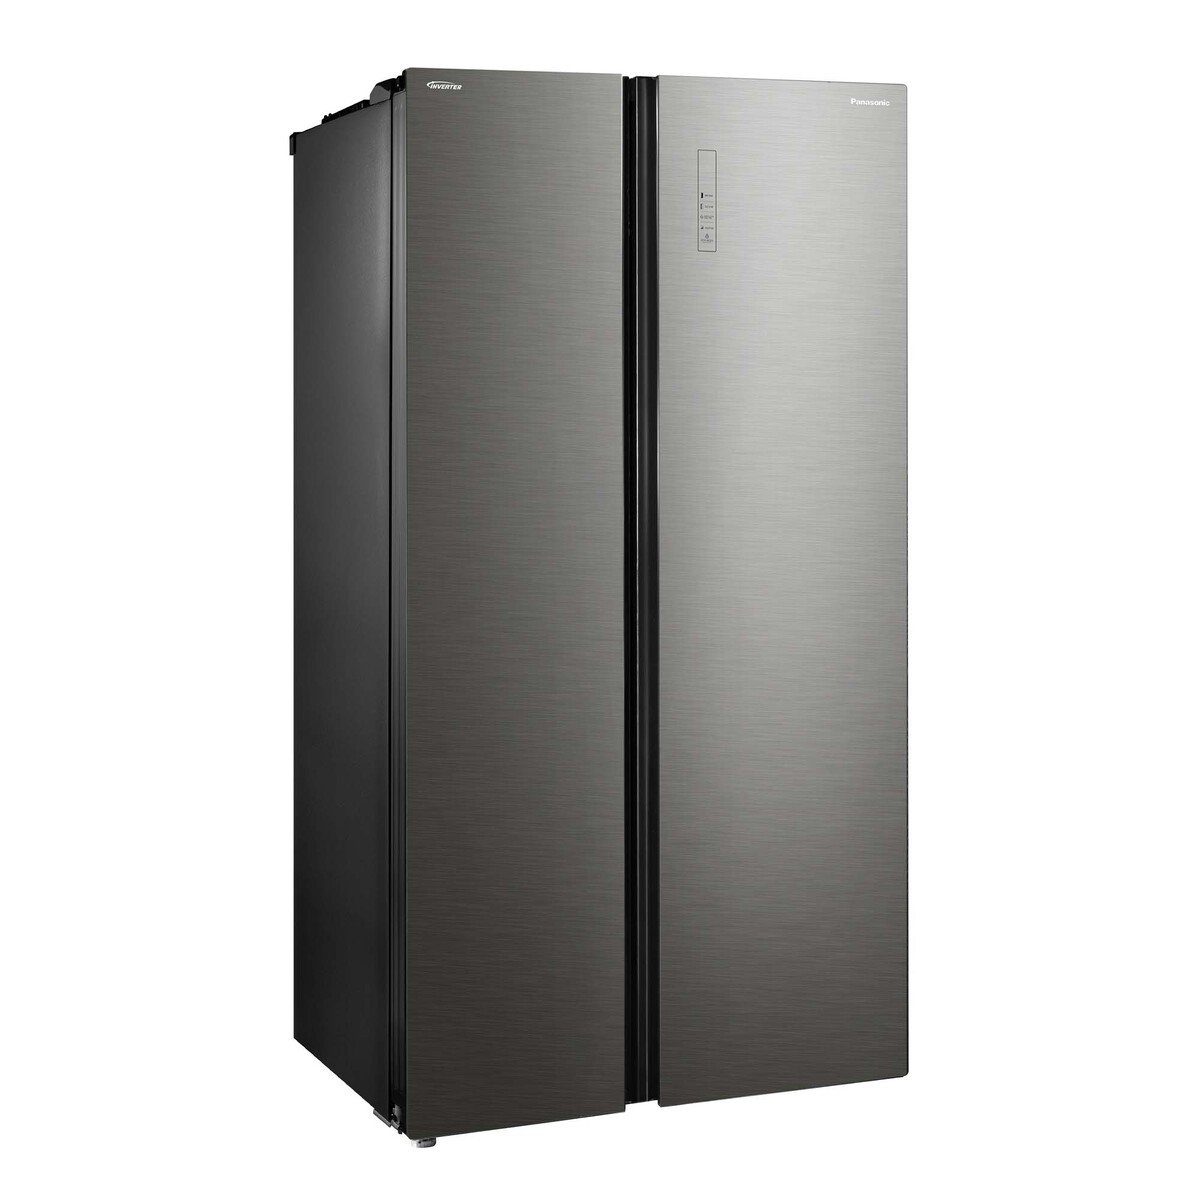 Panasonic Side by Side Refrigerator, 527 L, Silver, NR-BS704GKAE